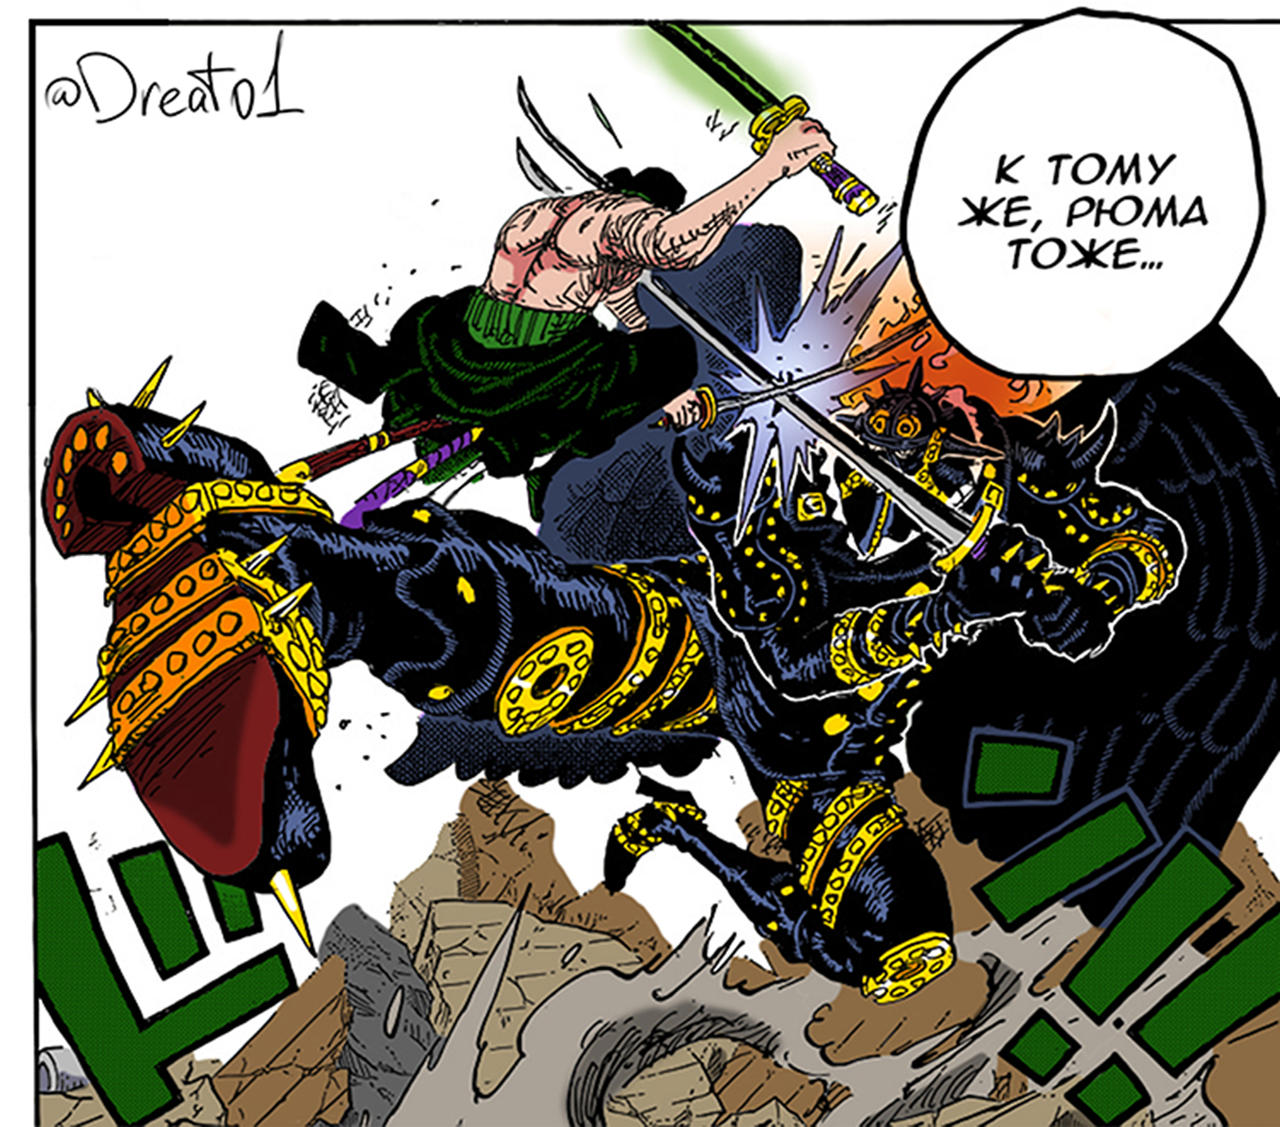 Zoro Defeats King  One Piece 